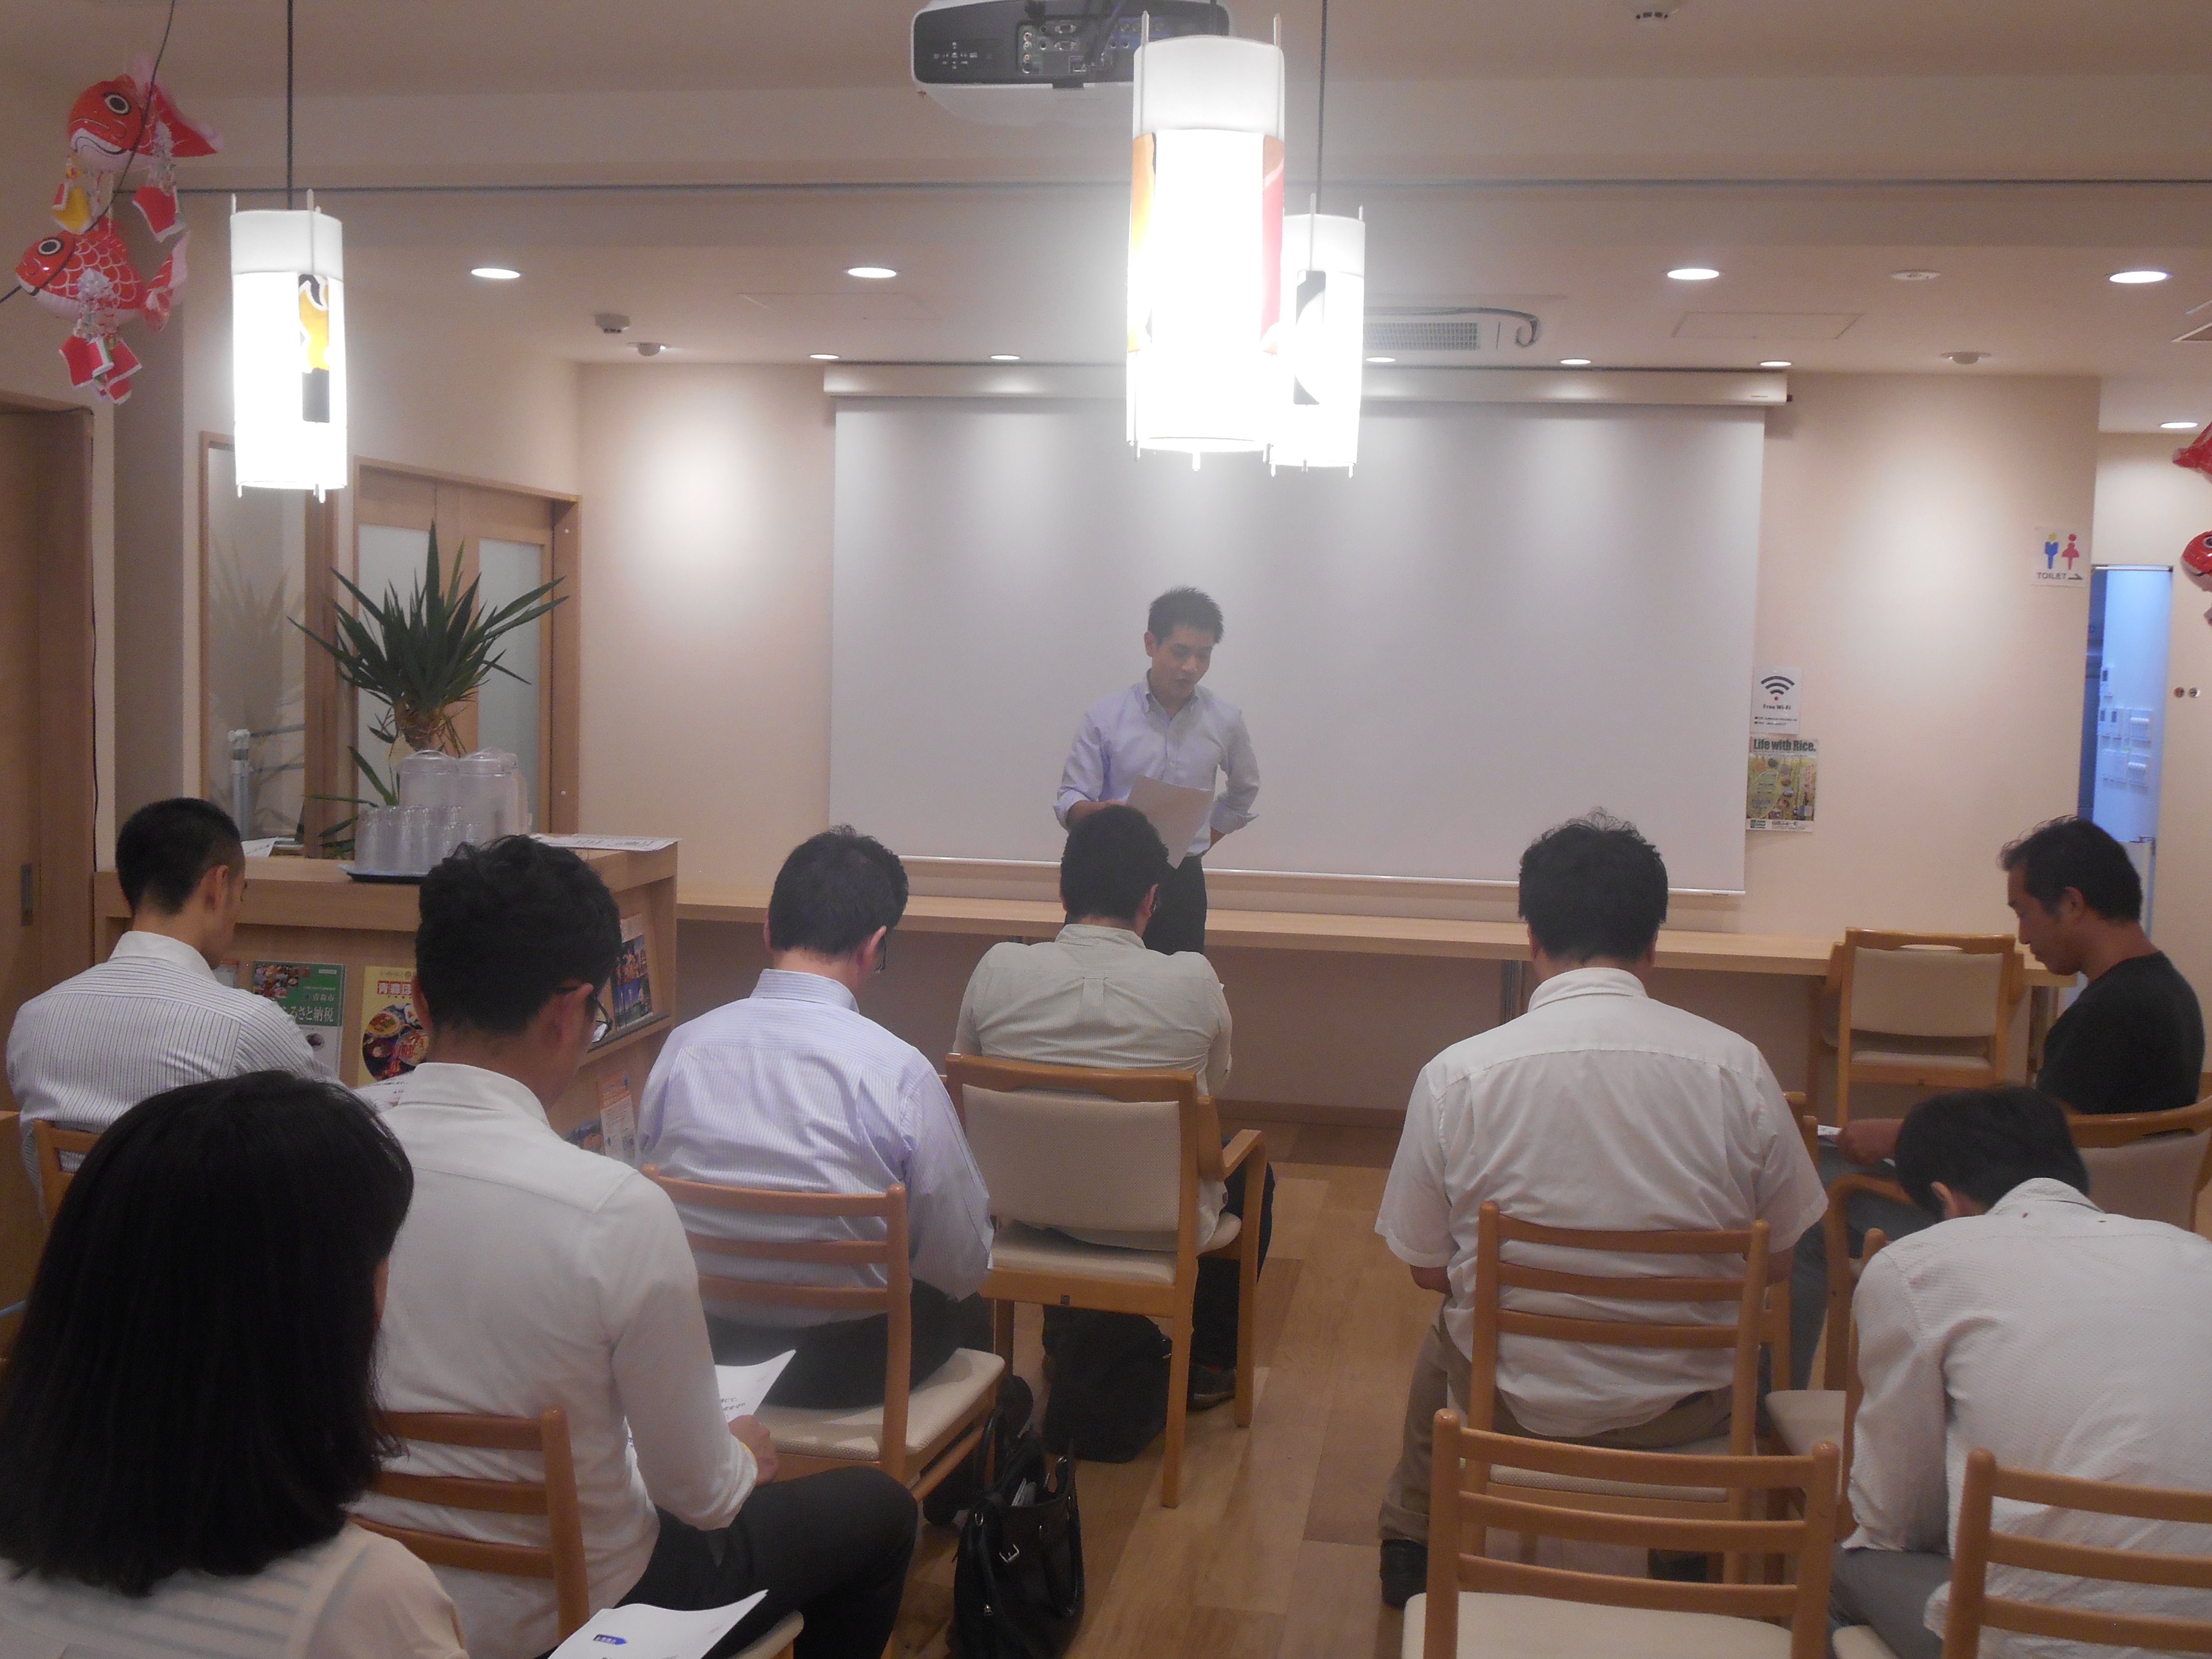 DSCN1890 - AoMoLink〜赤坂〜の第2回勉強会&交流会開催します。